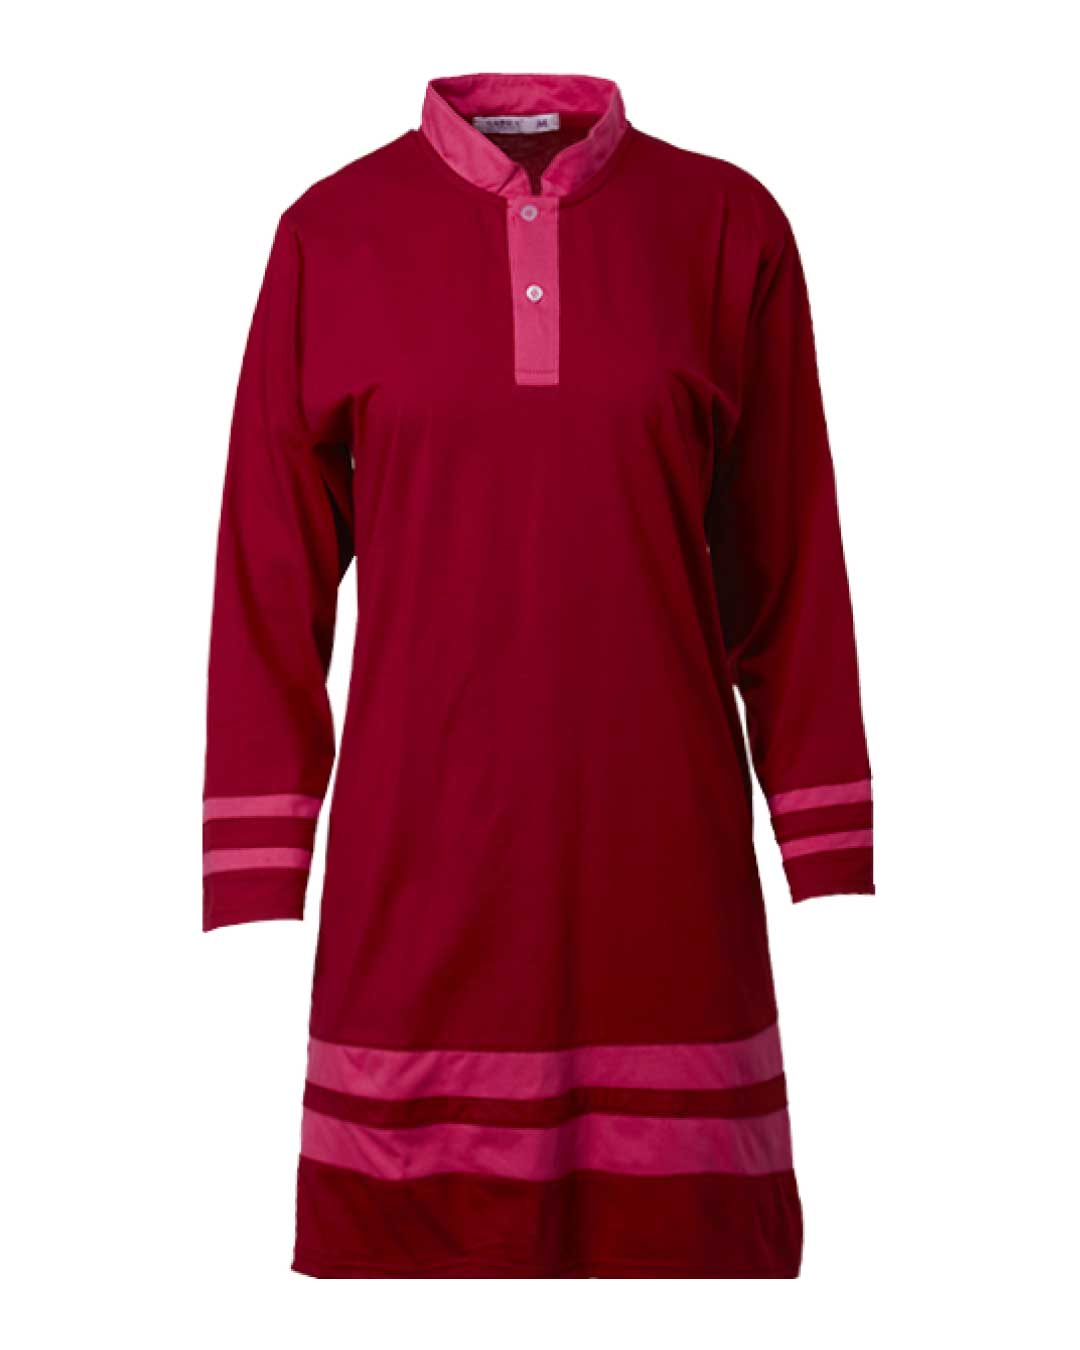 sarra fashion collection smw 1300 inayah muslimah wear